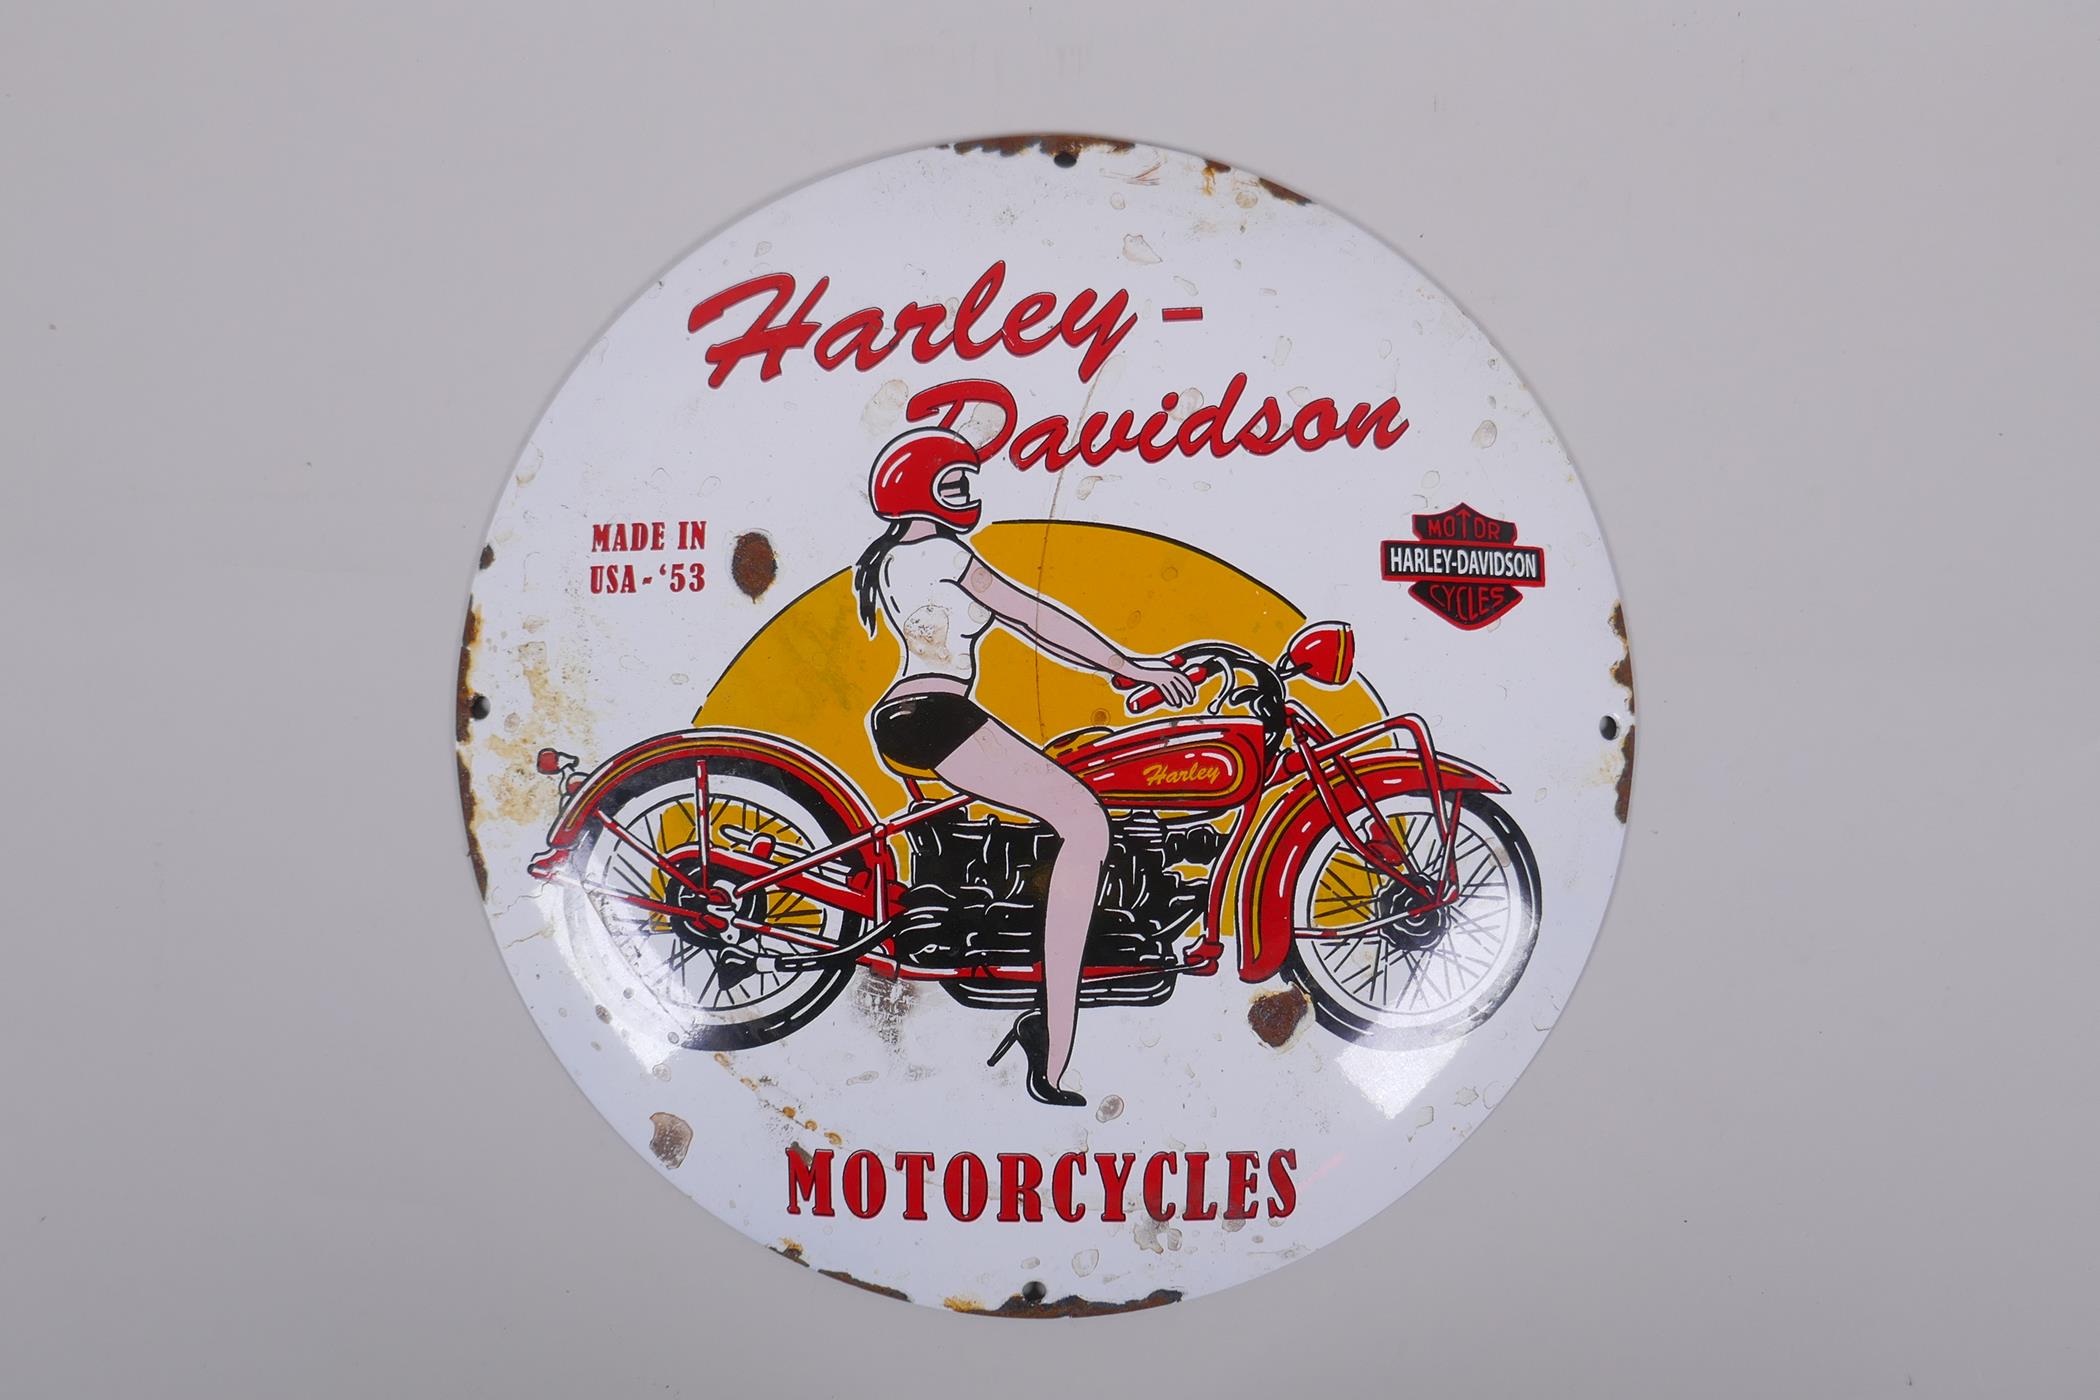 A vintage style Harley Davidson convex enamel advertising sign, 30cm diameter